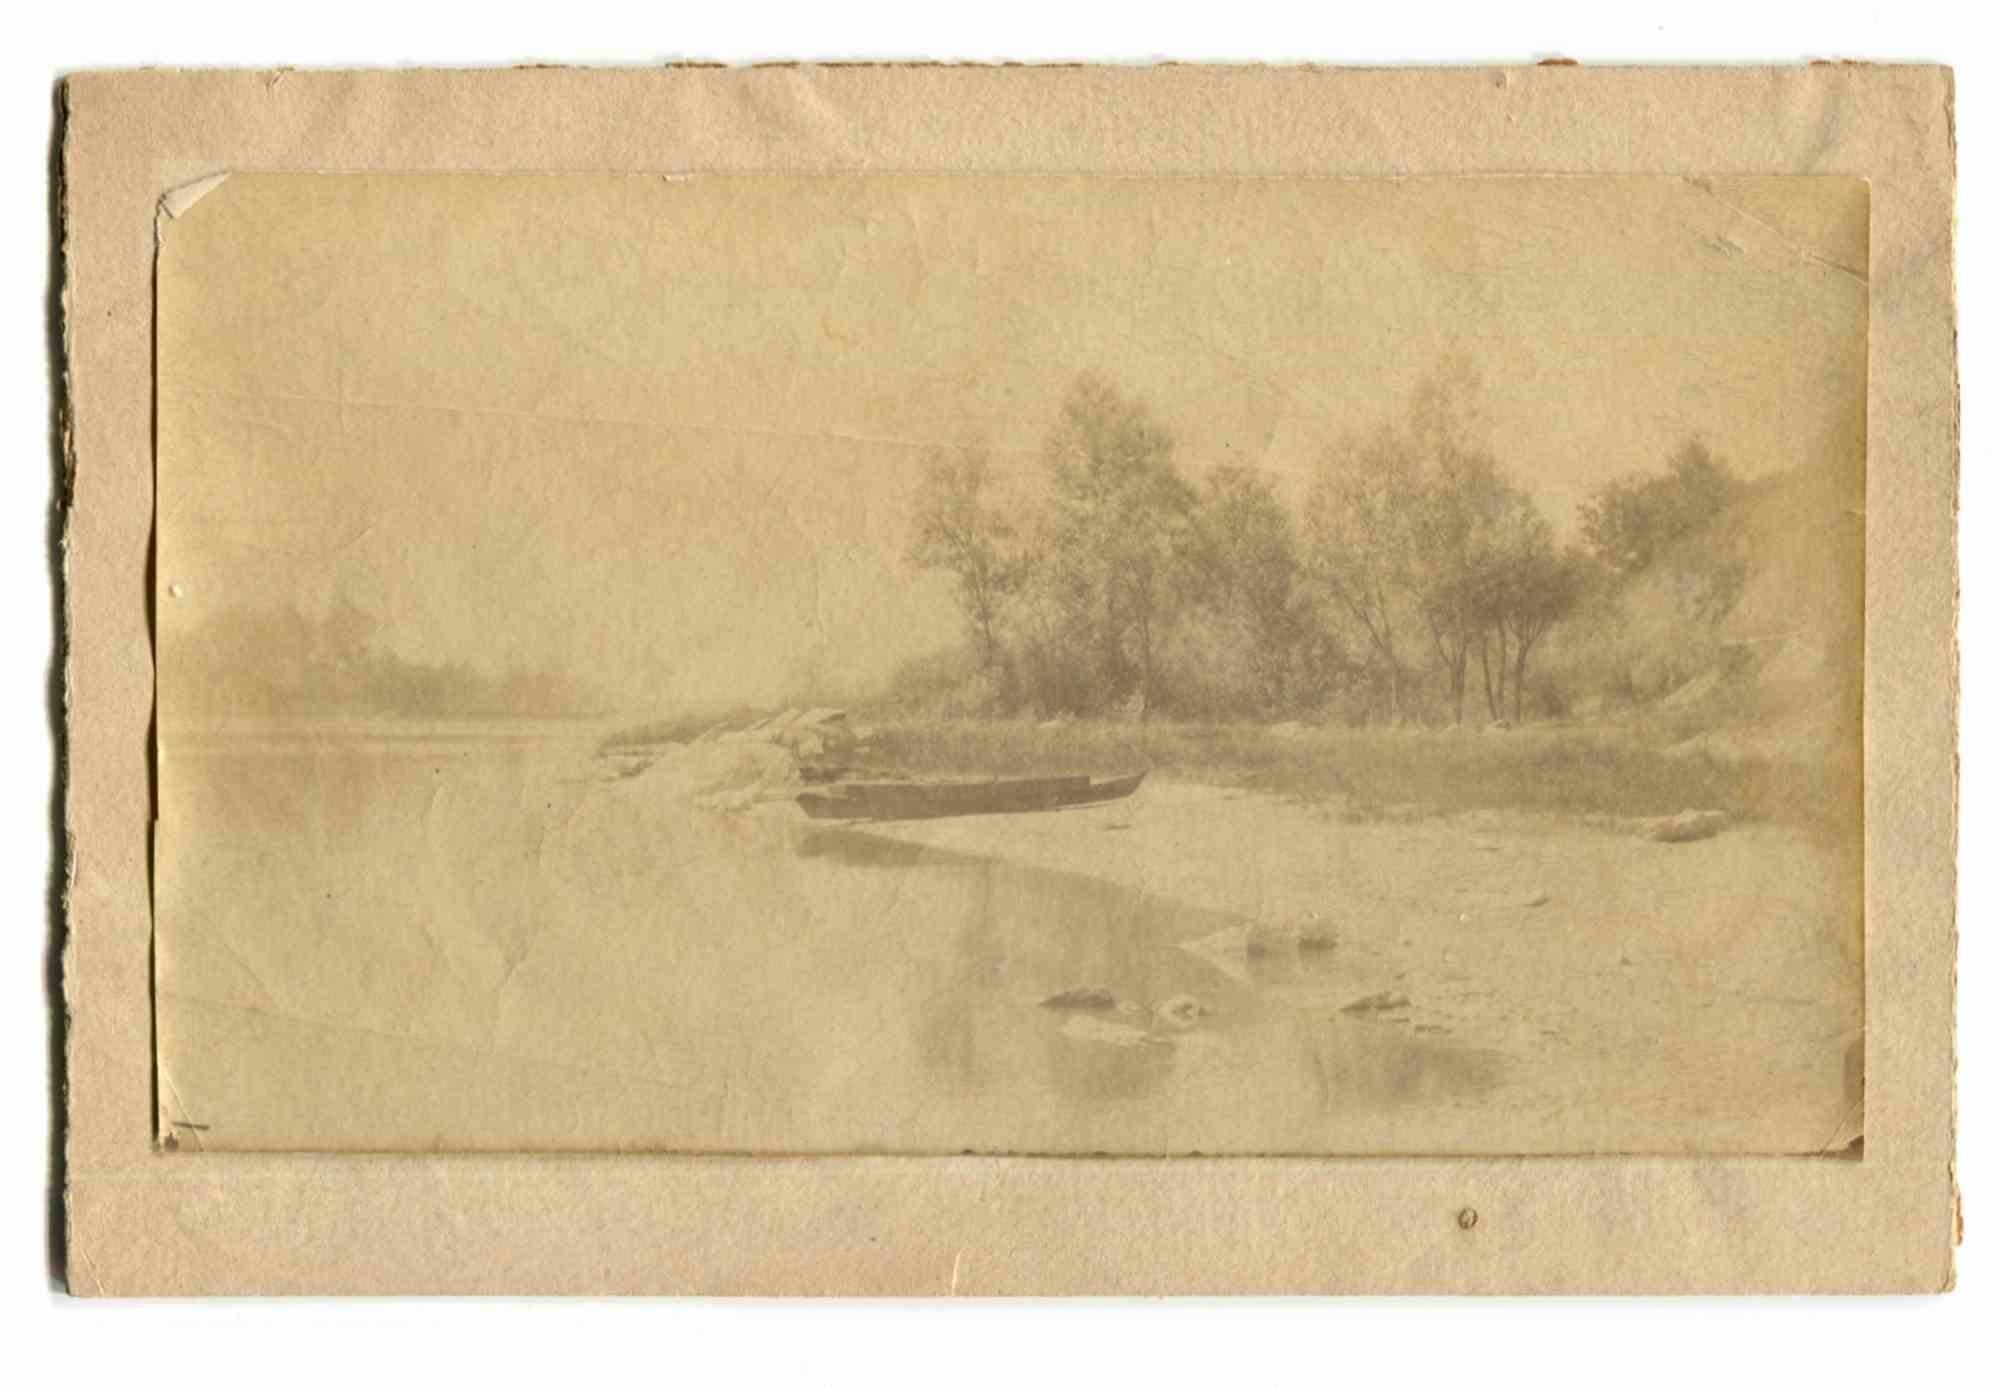 Unknown Figurative Photograph - Landscape - Vintage photo - 19th Century